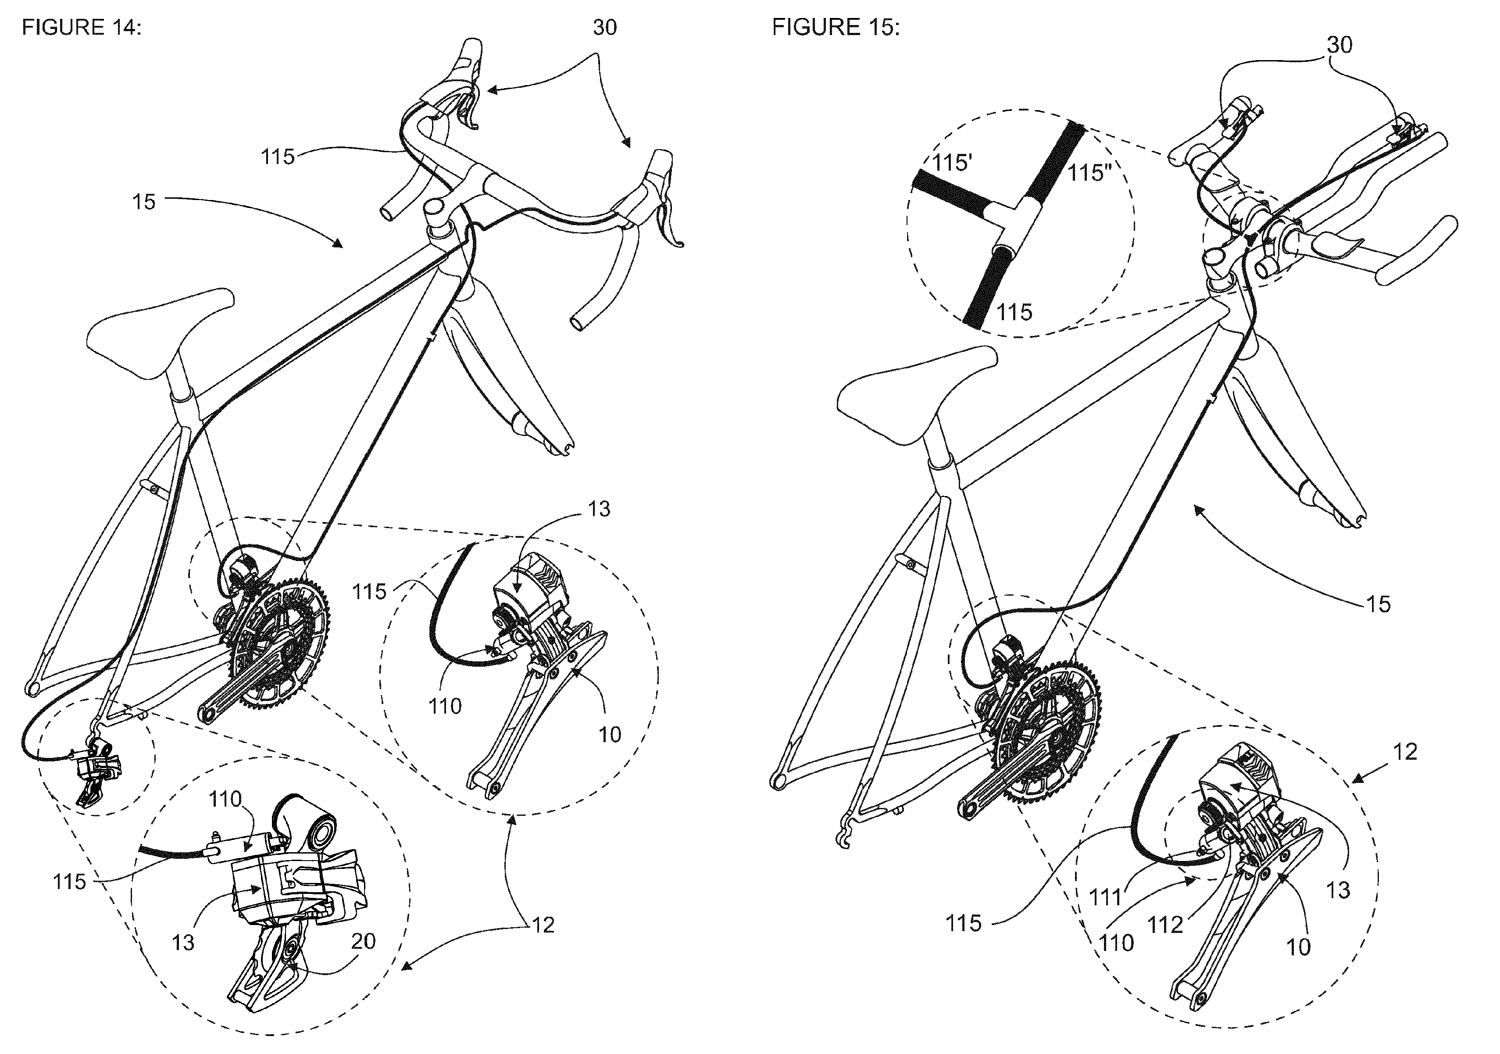 rotor-patent-one-way-shift-mechanism1